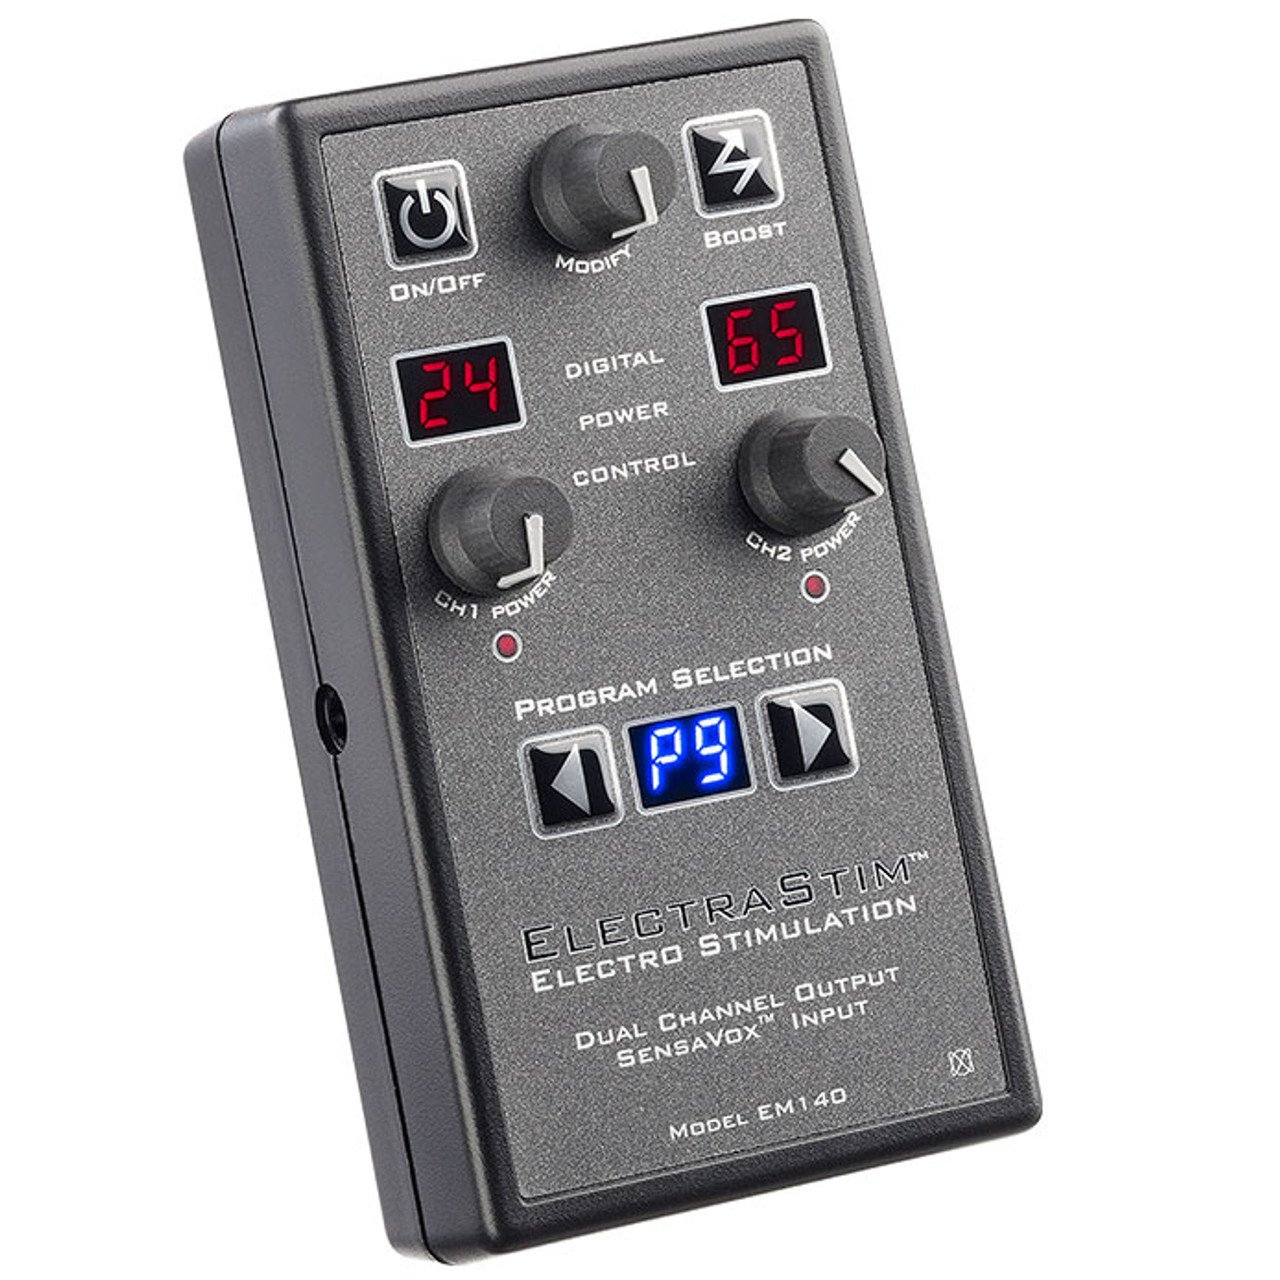 Buy the SensaVox EM140 Dual Channel with Audio Input Electro Stimulator Electrosex Power Box